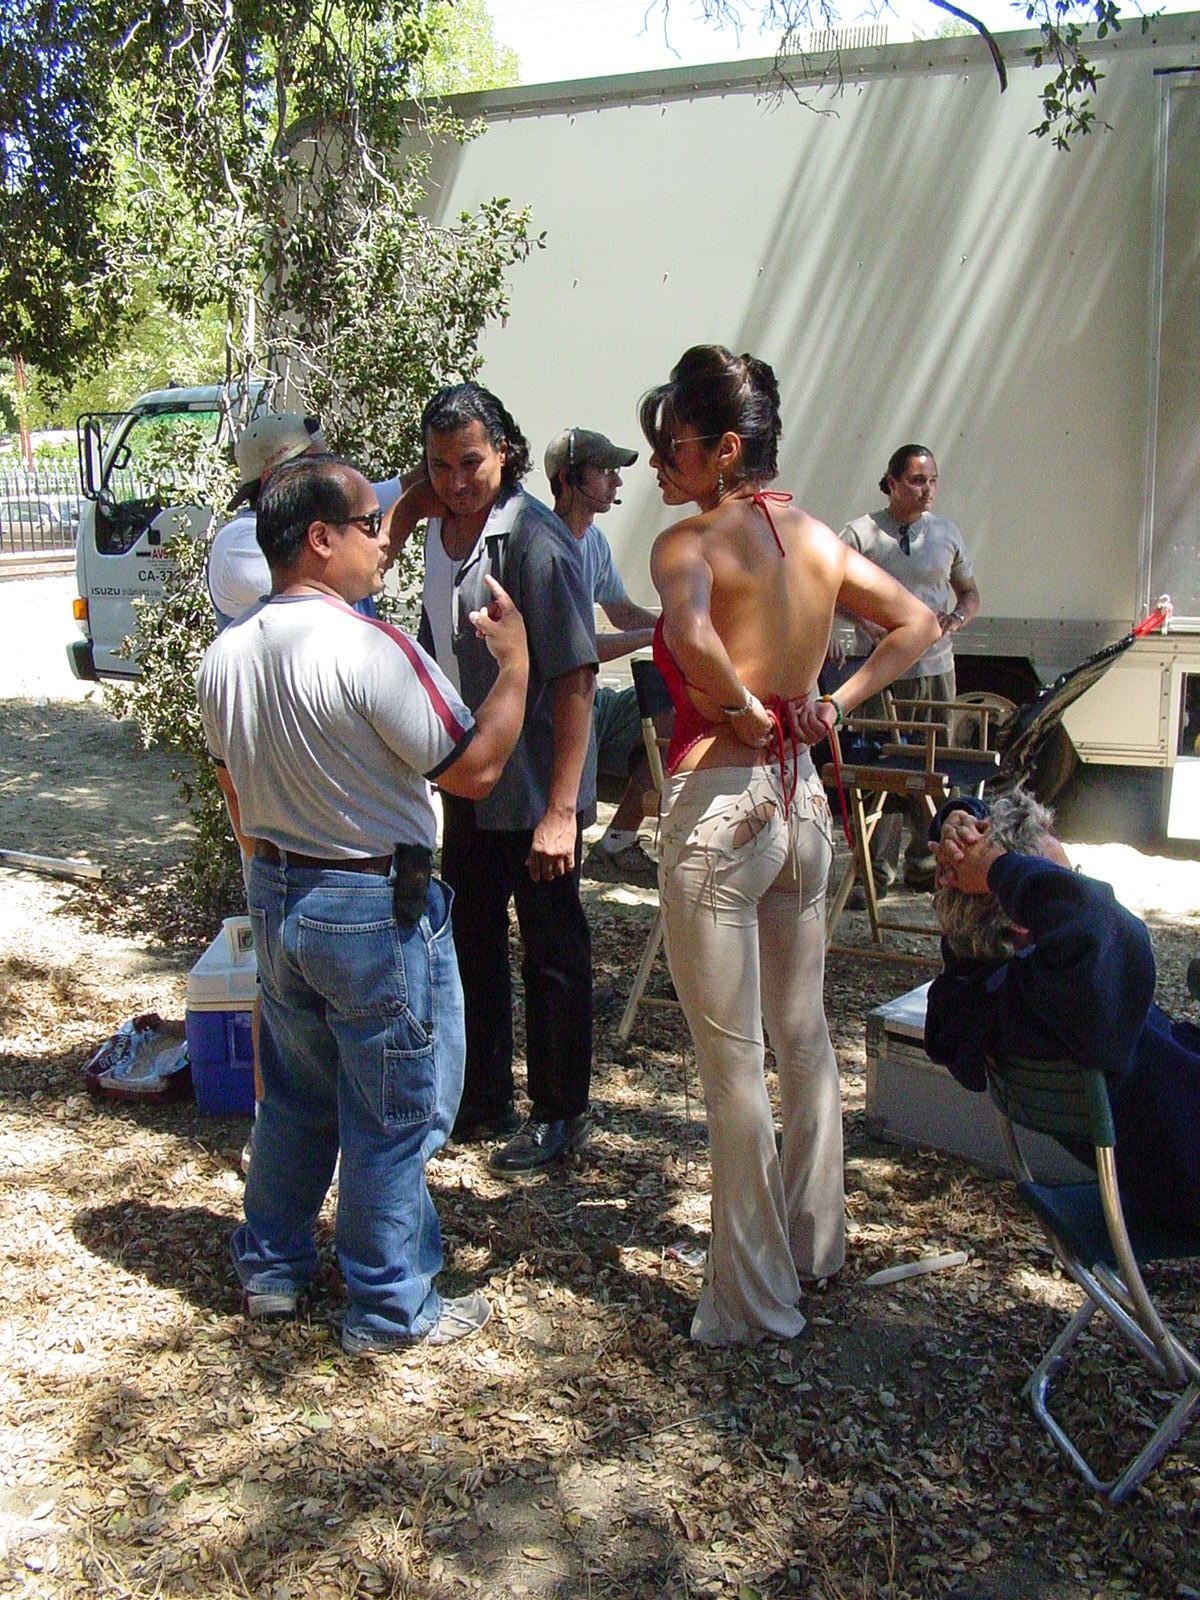 On the set of DEVIL'S KNIGHT prepping a stunt with Elizabeth Alvarez and stunt coordinator Joe Perez.